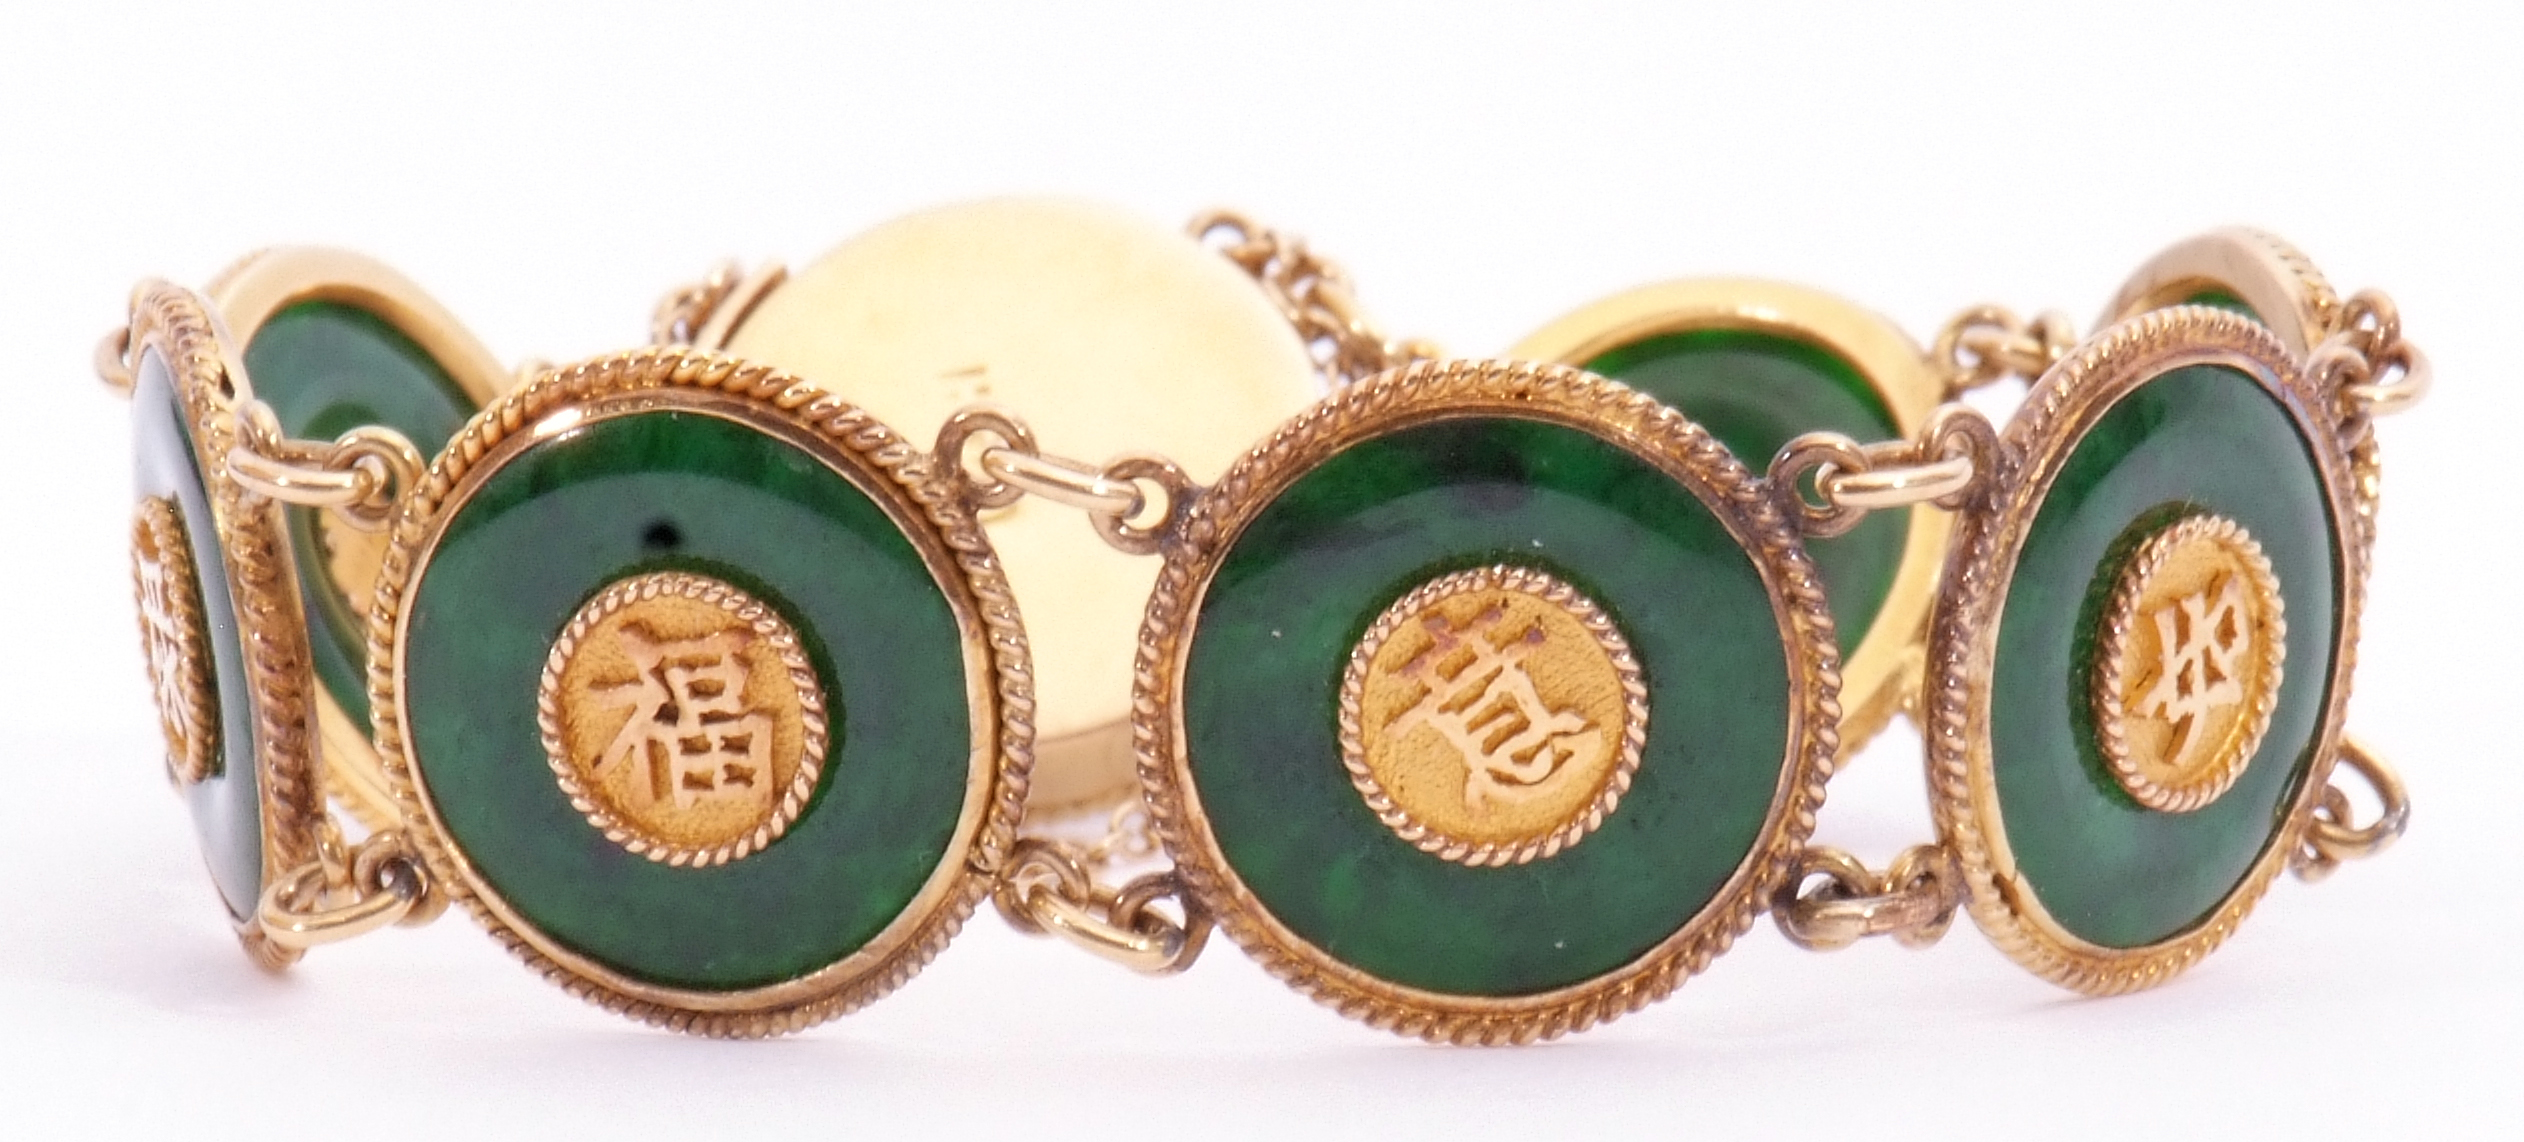 Chinese high grade yellow metal and jade bracelet comprising eight circular jade discs, each - Image 4 of 6